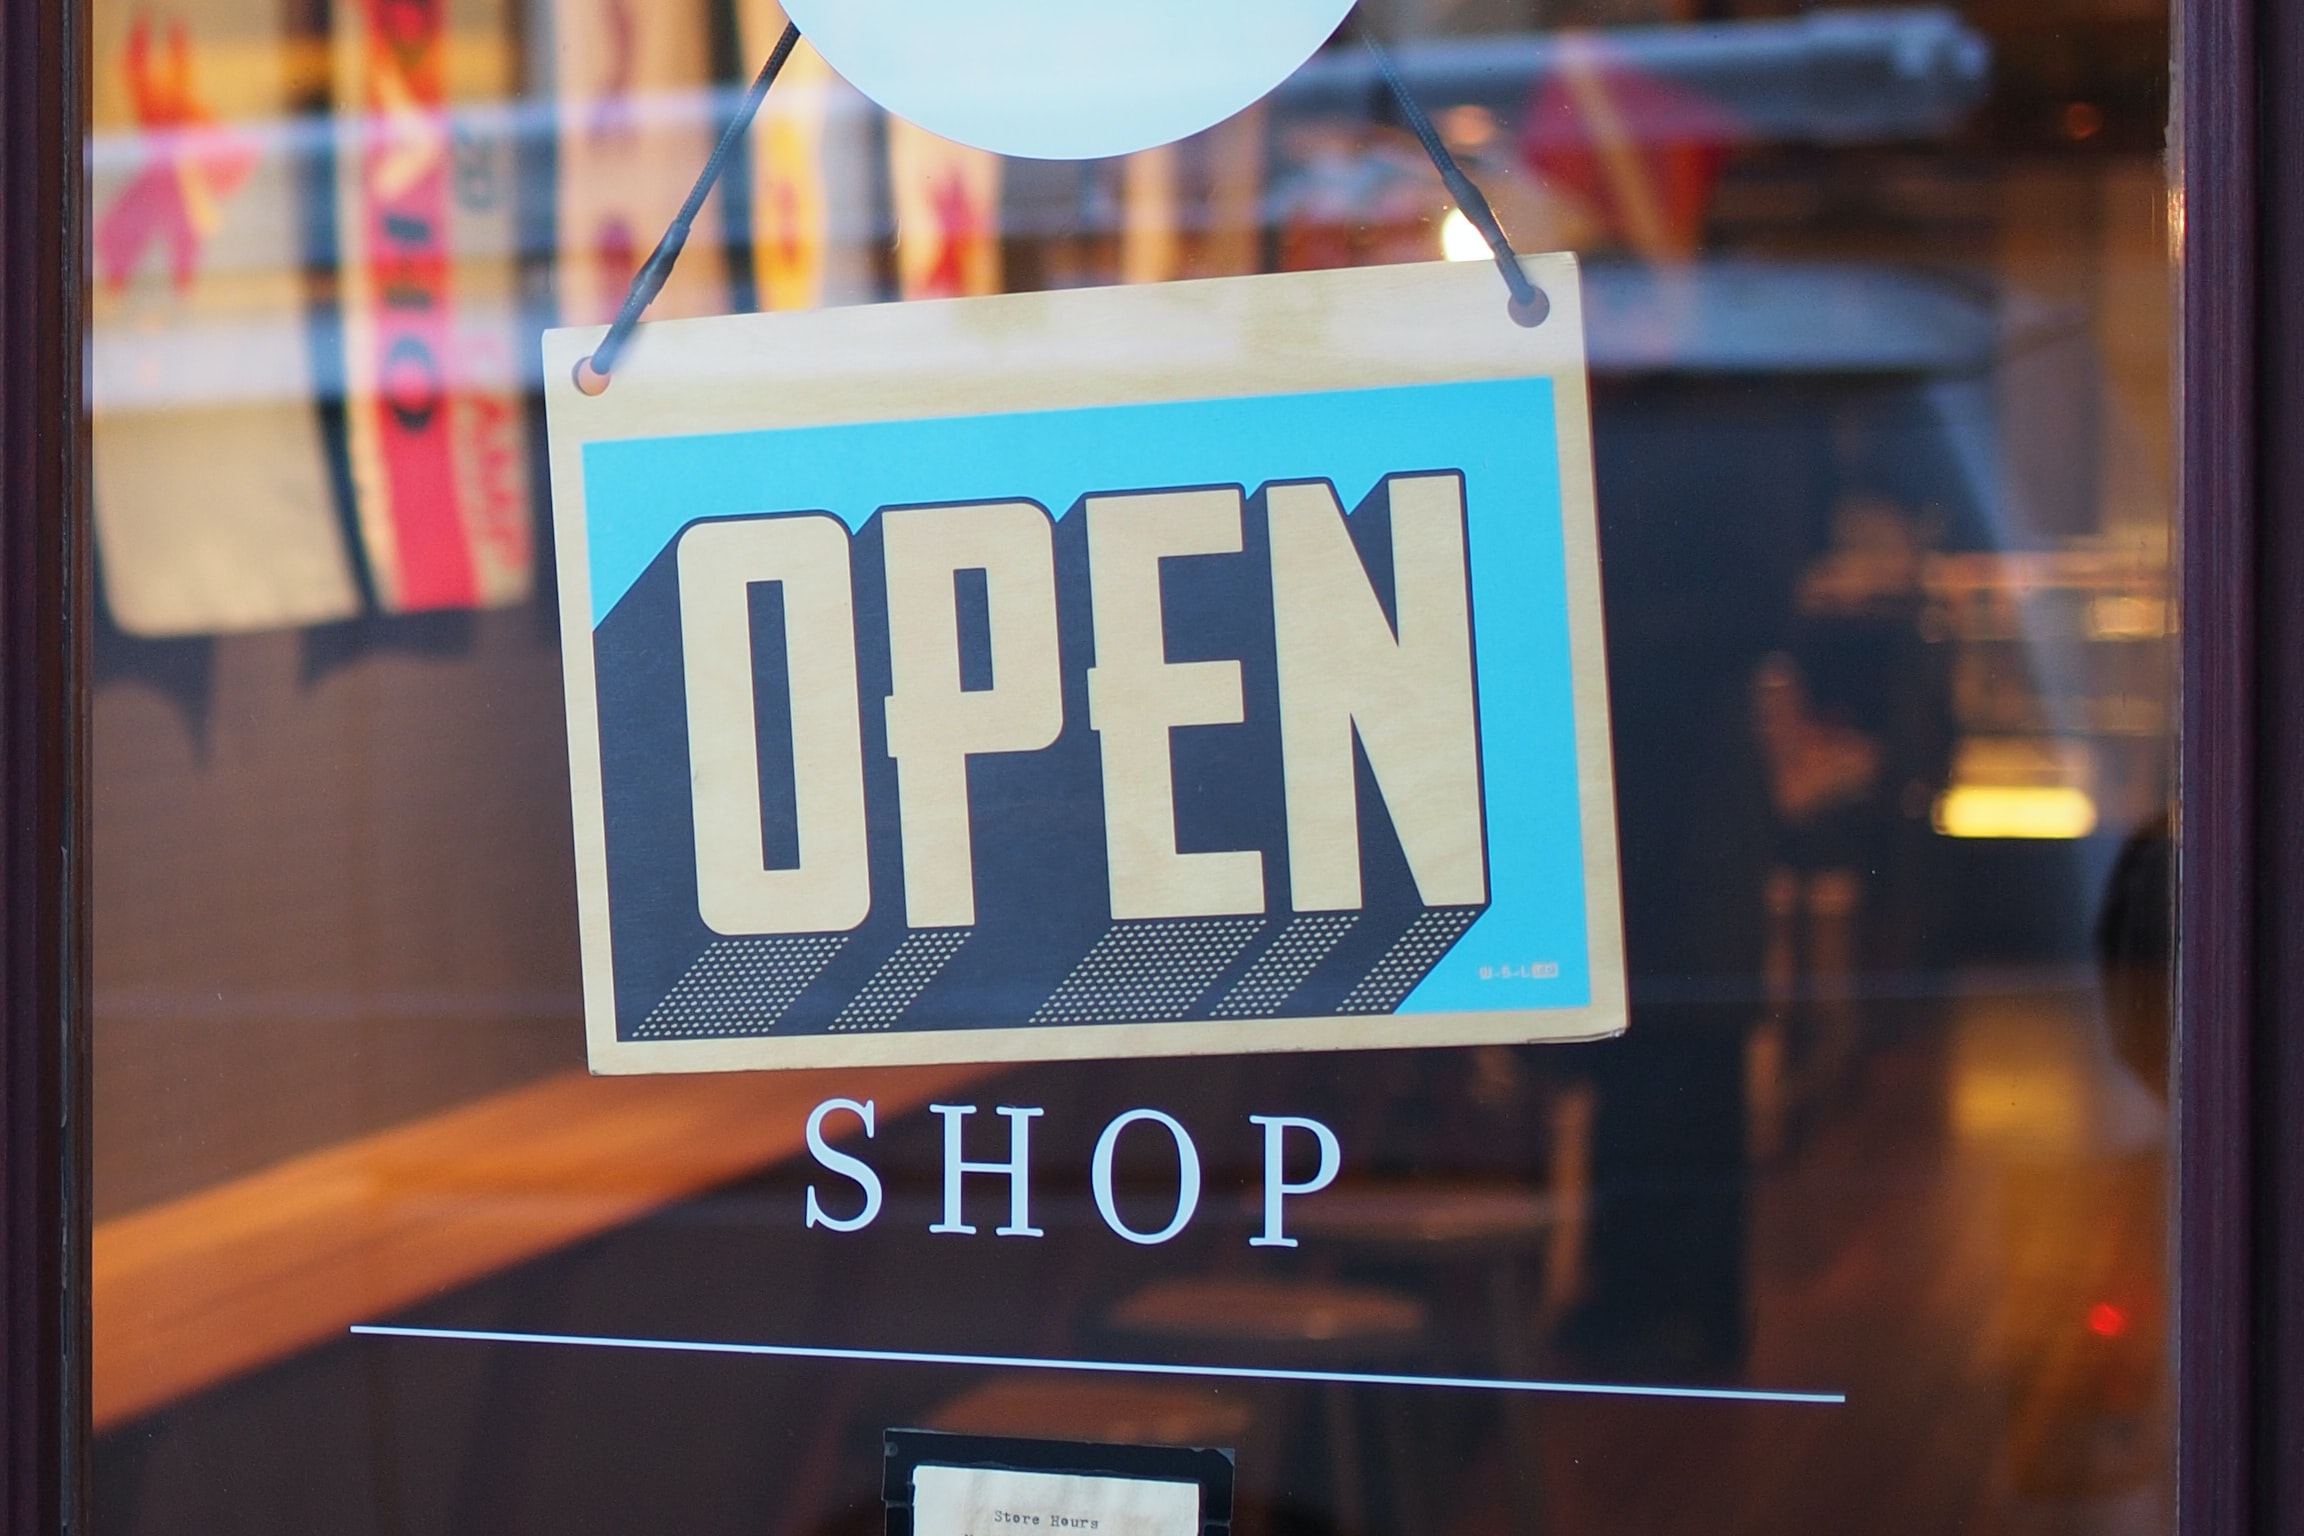 Open shop sign representing farmgate retailers in Ontario